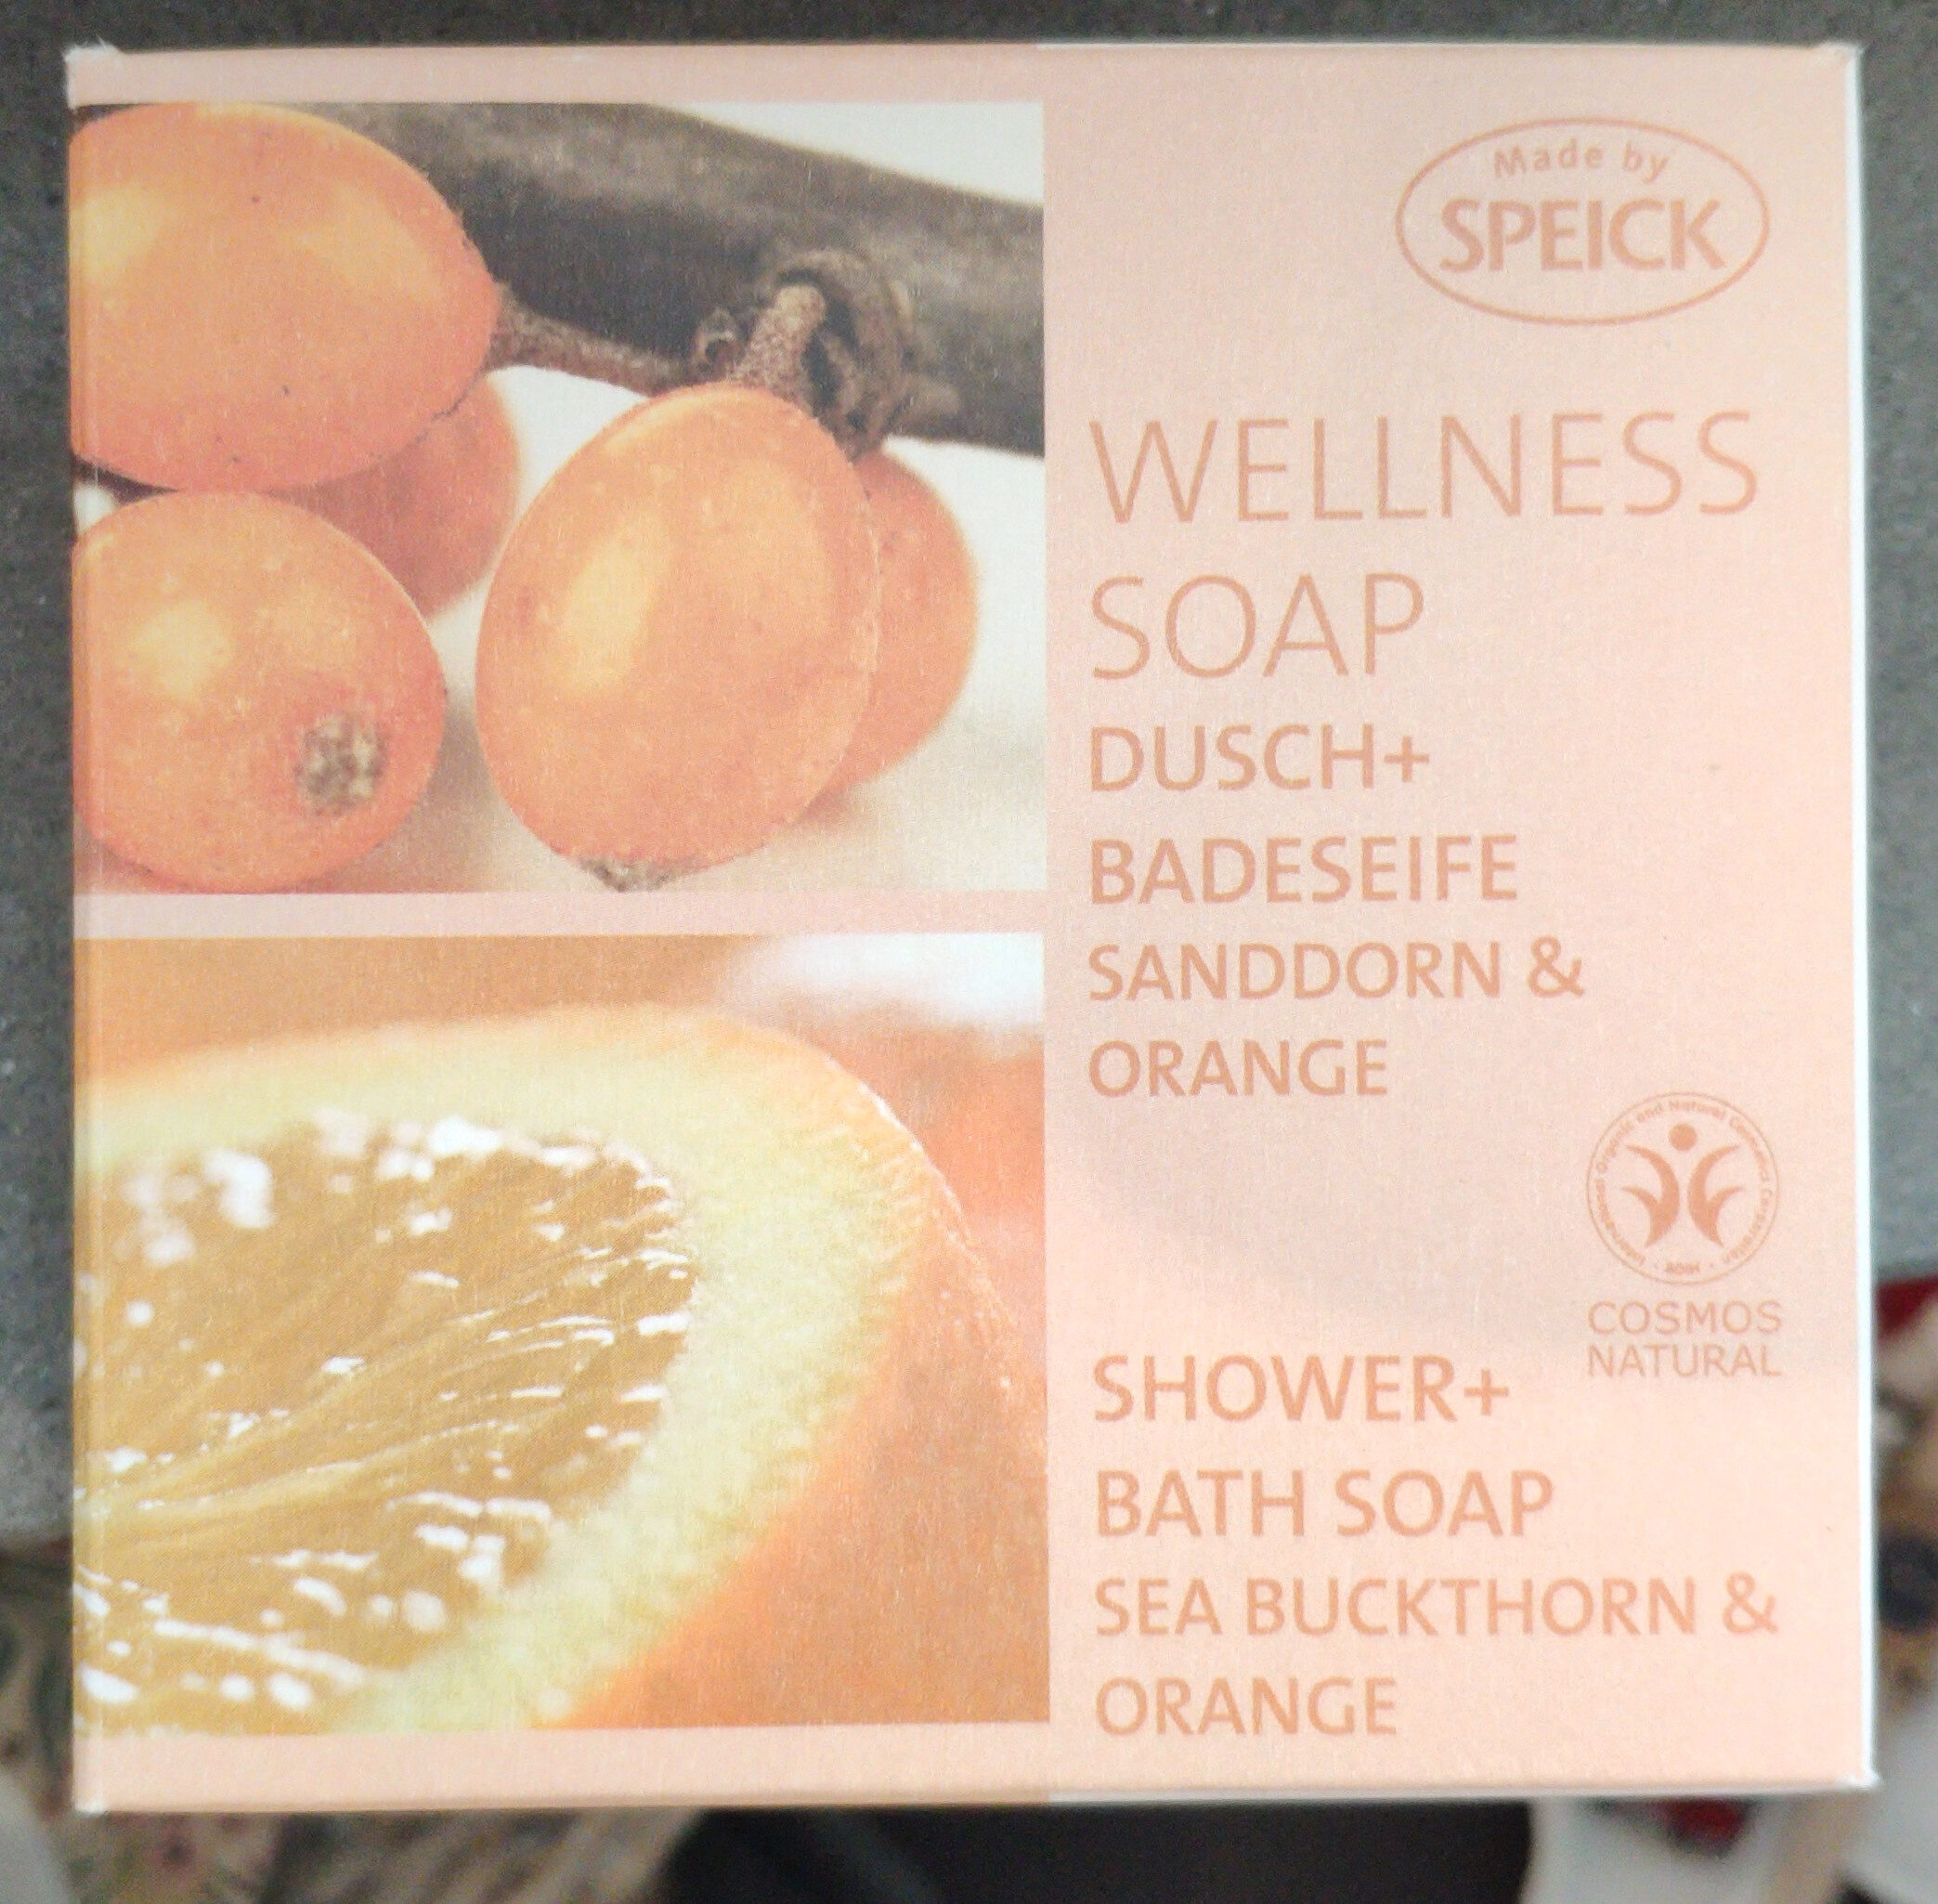 Wellness Soap Dusch+Badeseife Sanddorn & Orange - Product - en